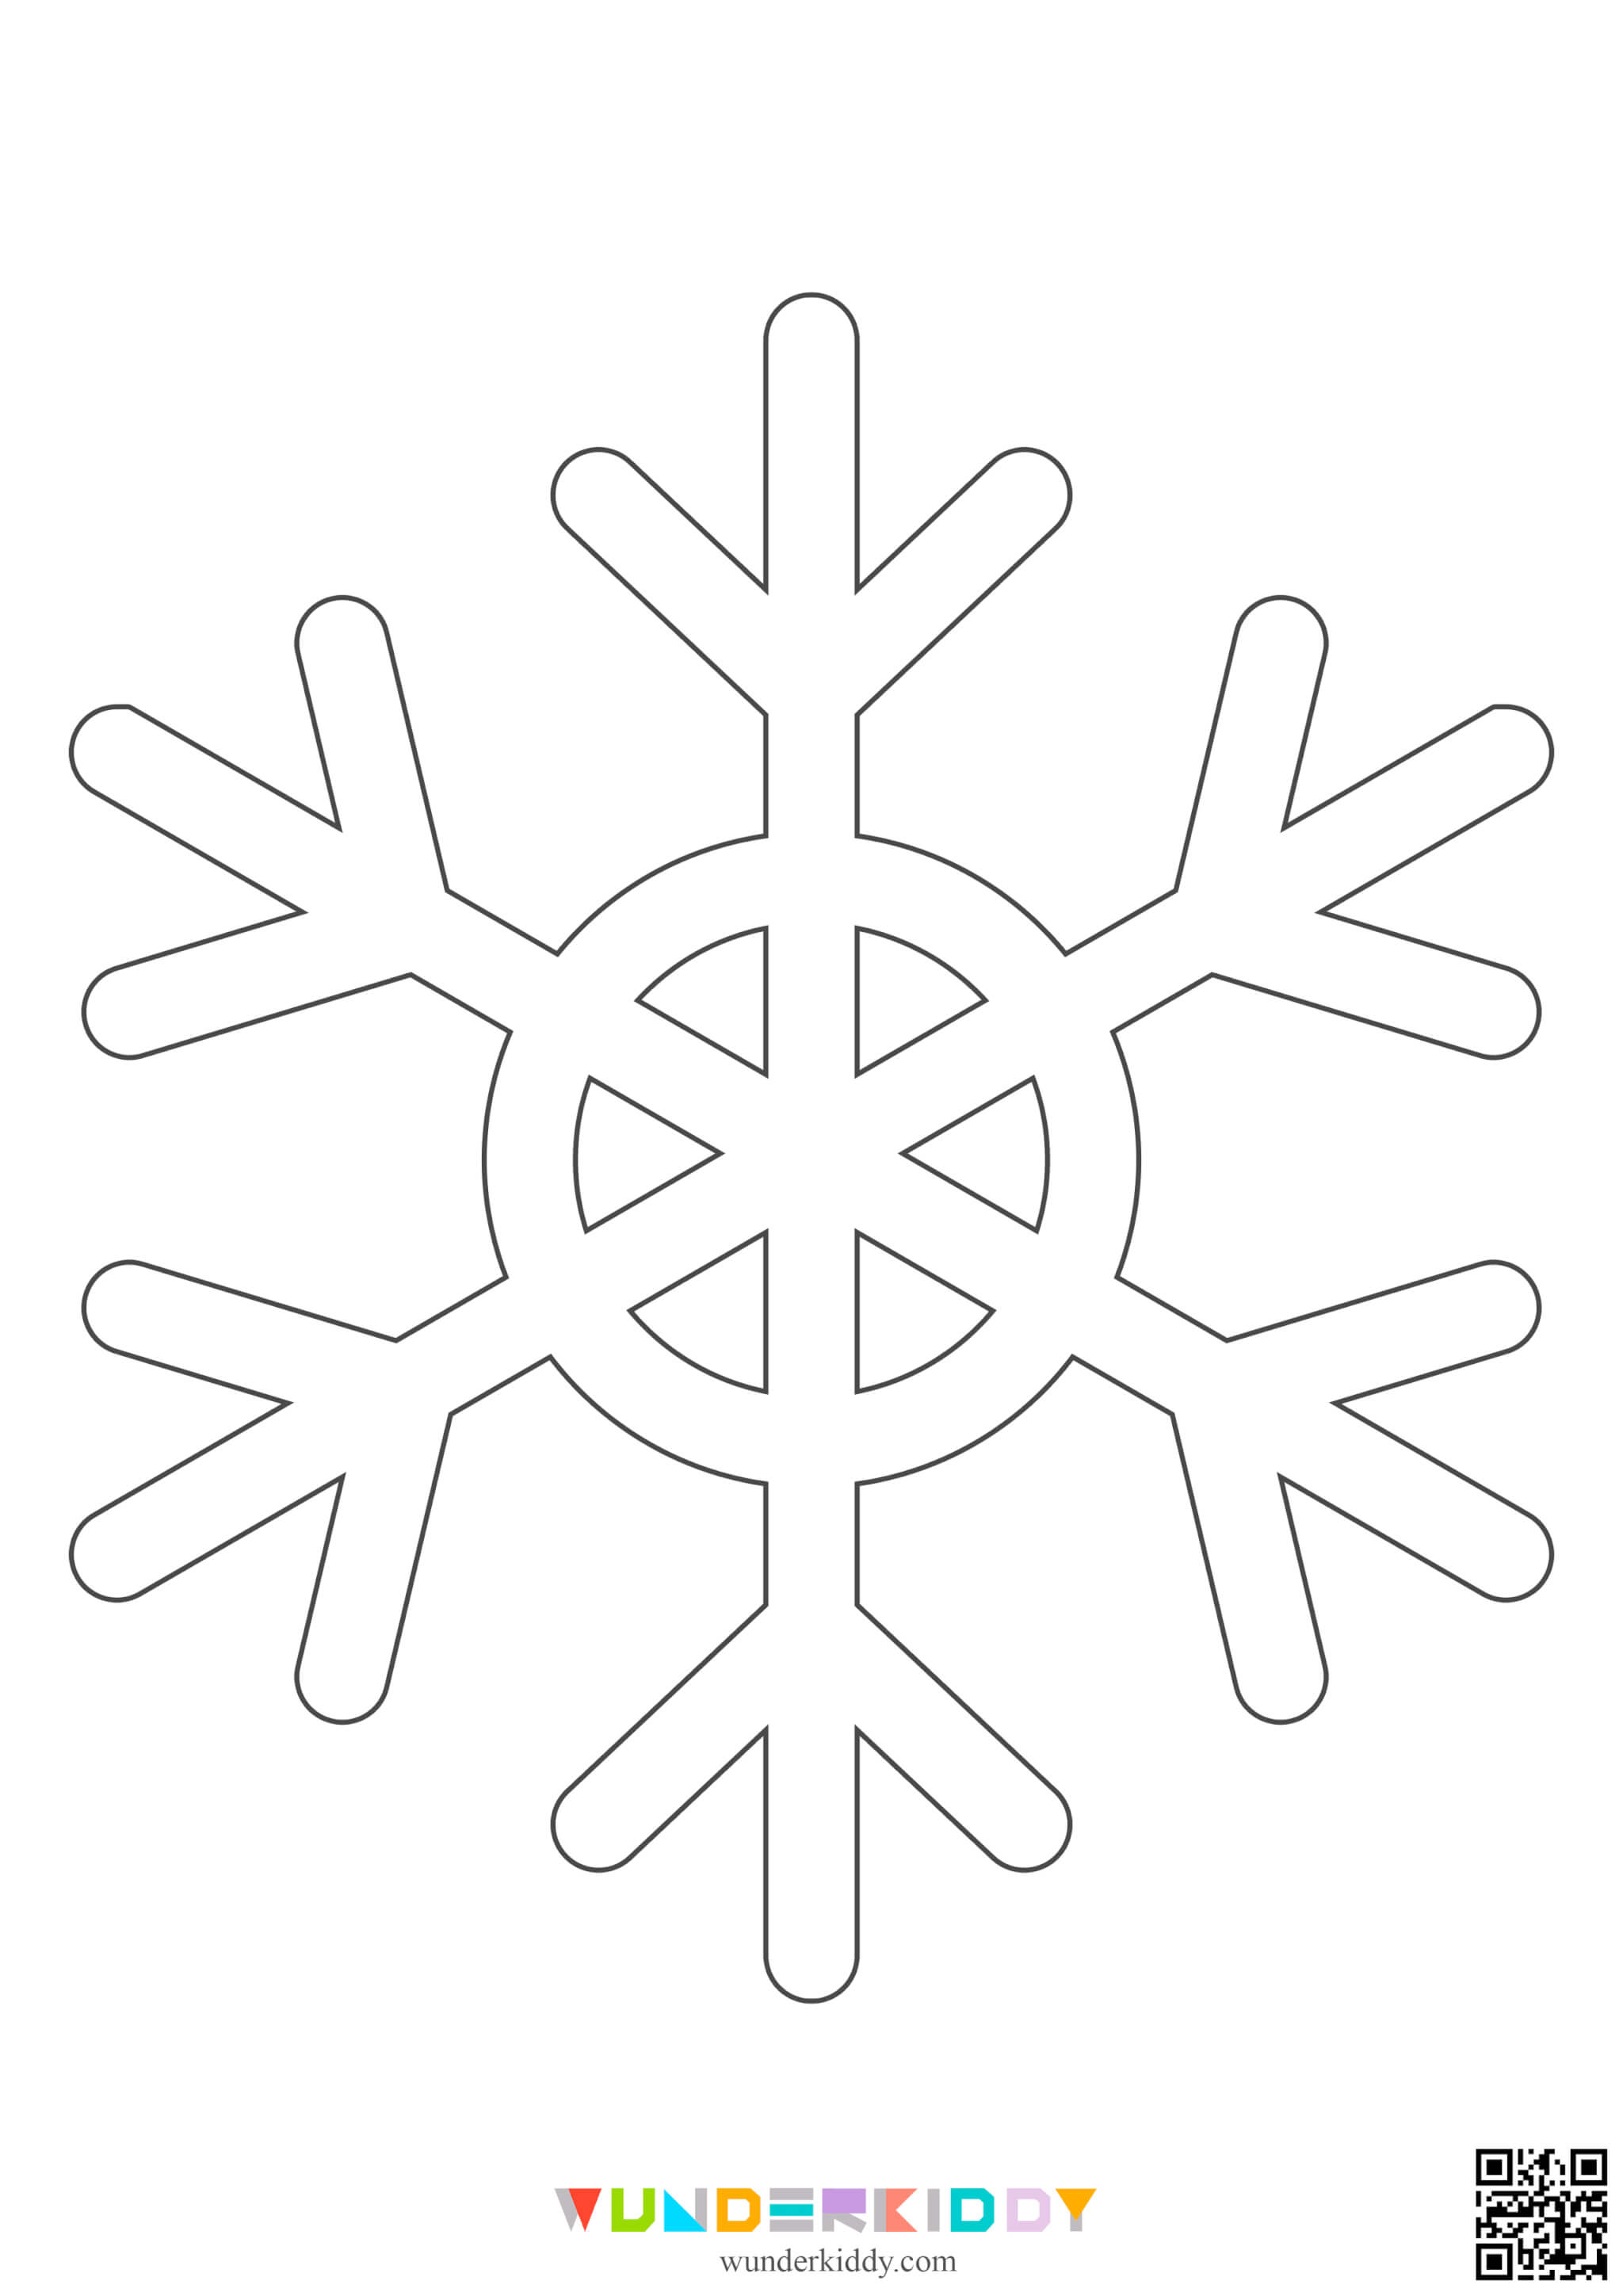 Snowflake Stencil Patterns - Image 5